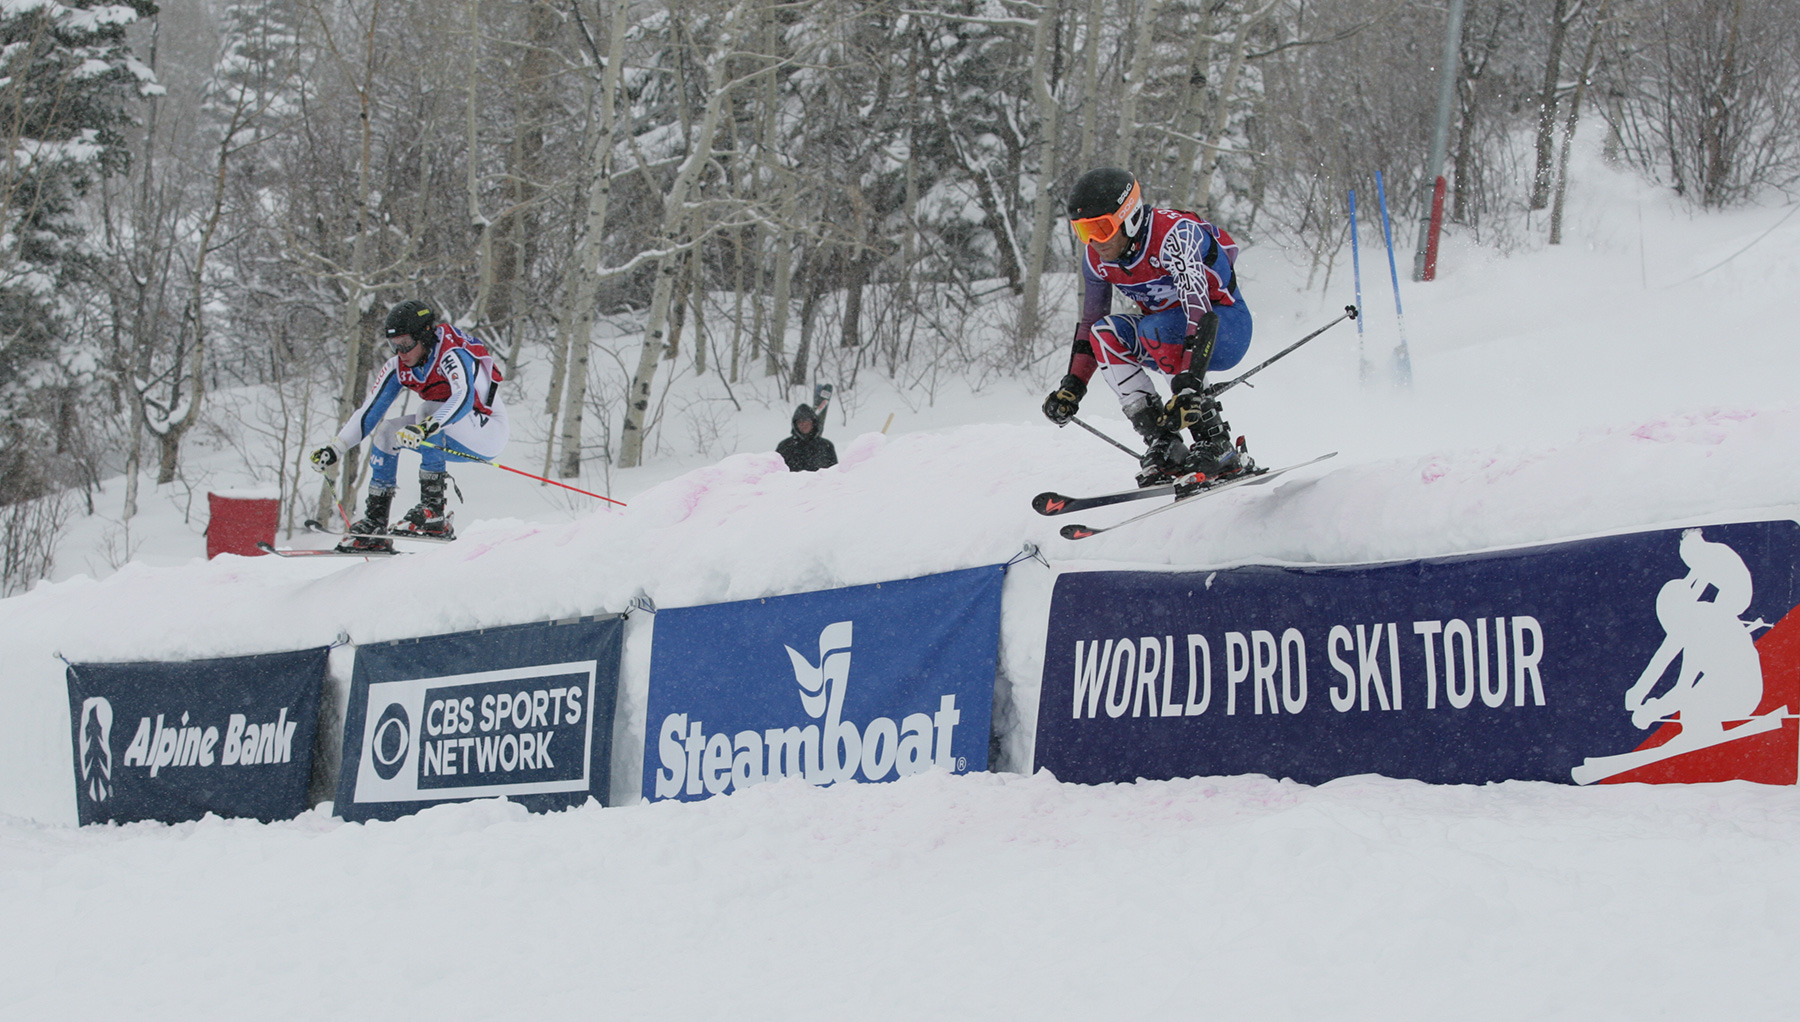 world pro ski tour wikipedia